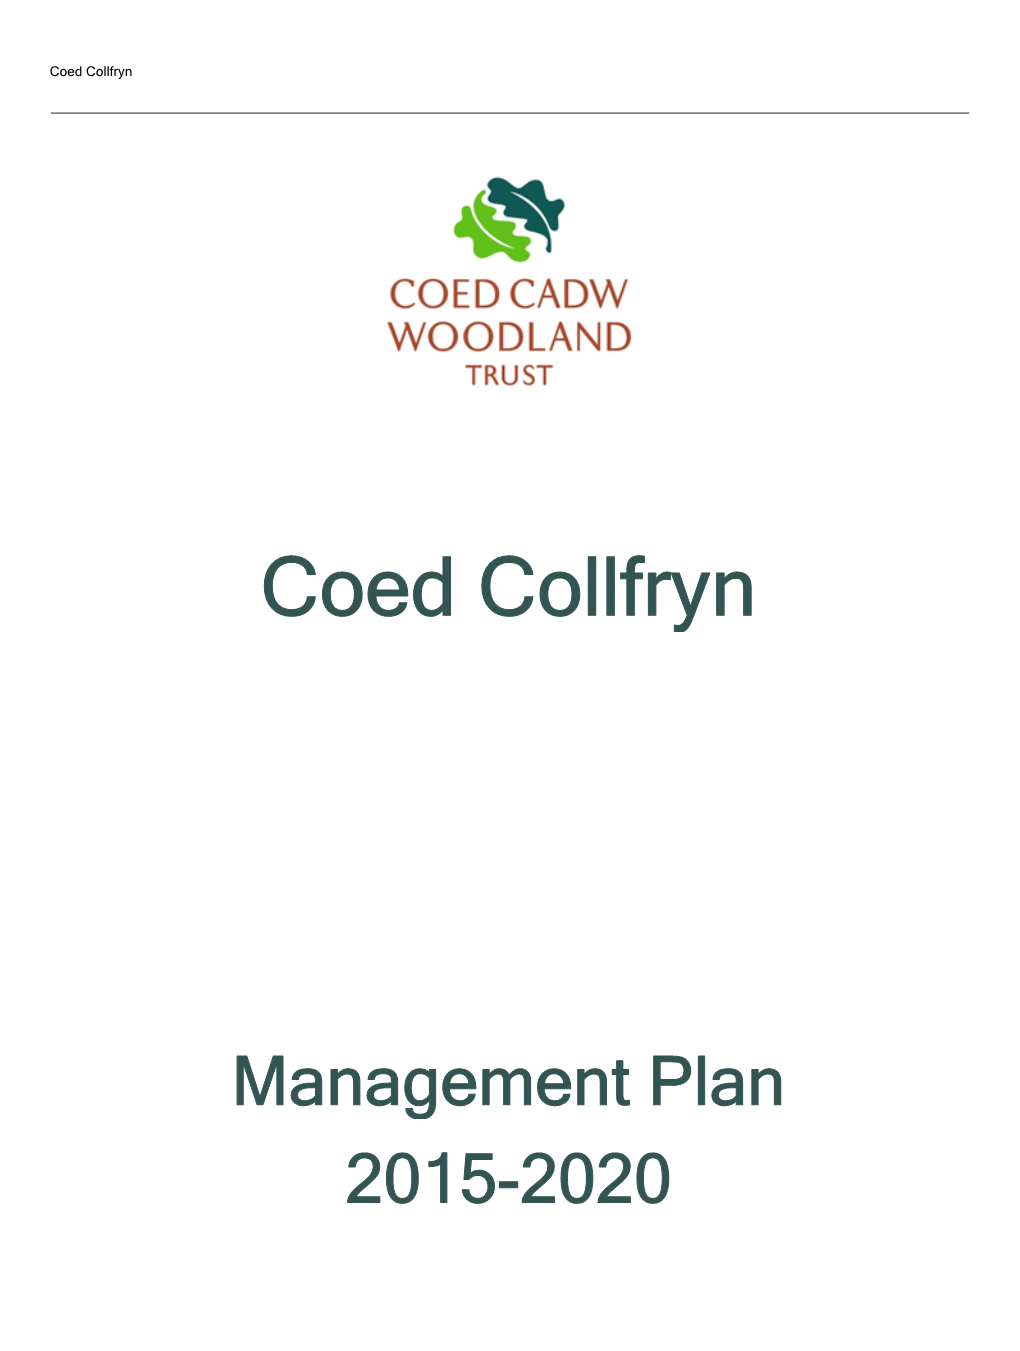 Coed Collfryn